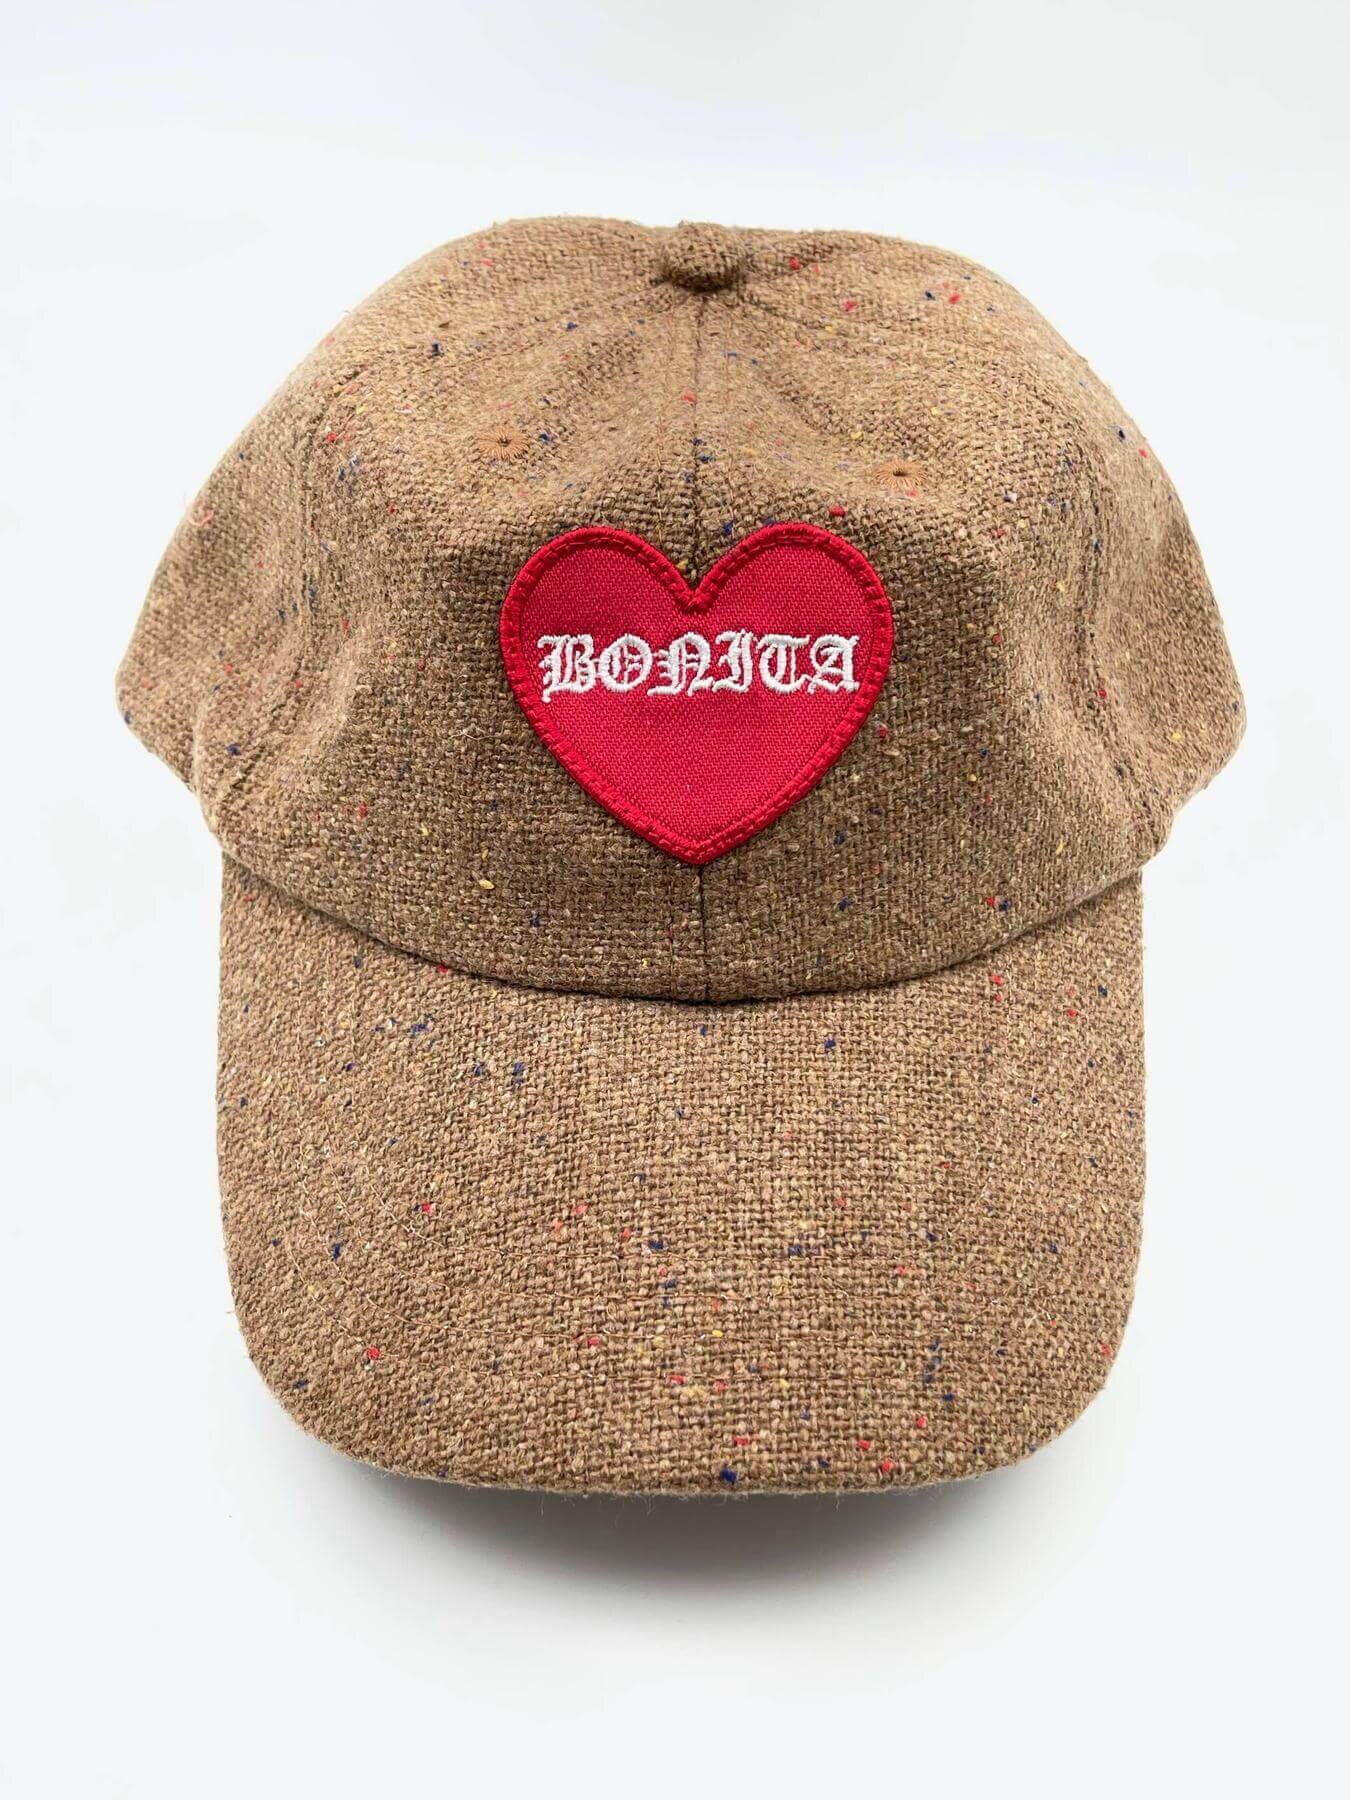 CNK-Viva-La-Bonita-The-Loudest-Hype-Woman-Collection-brown-twill-corazon-hat.jpg